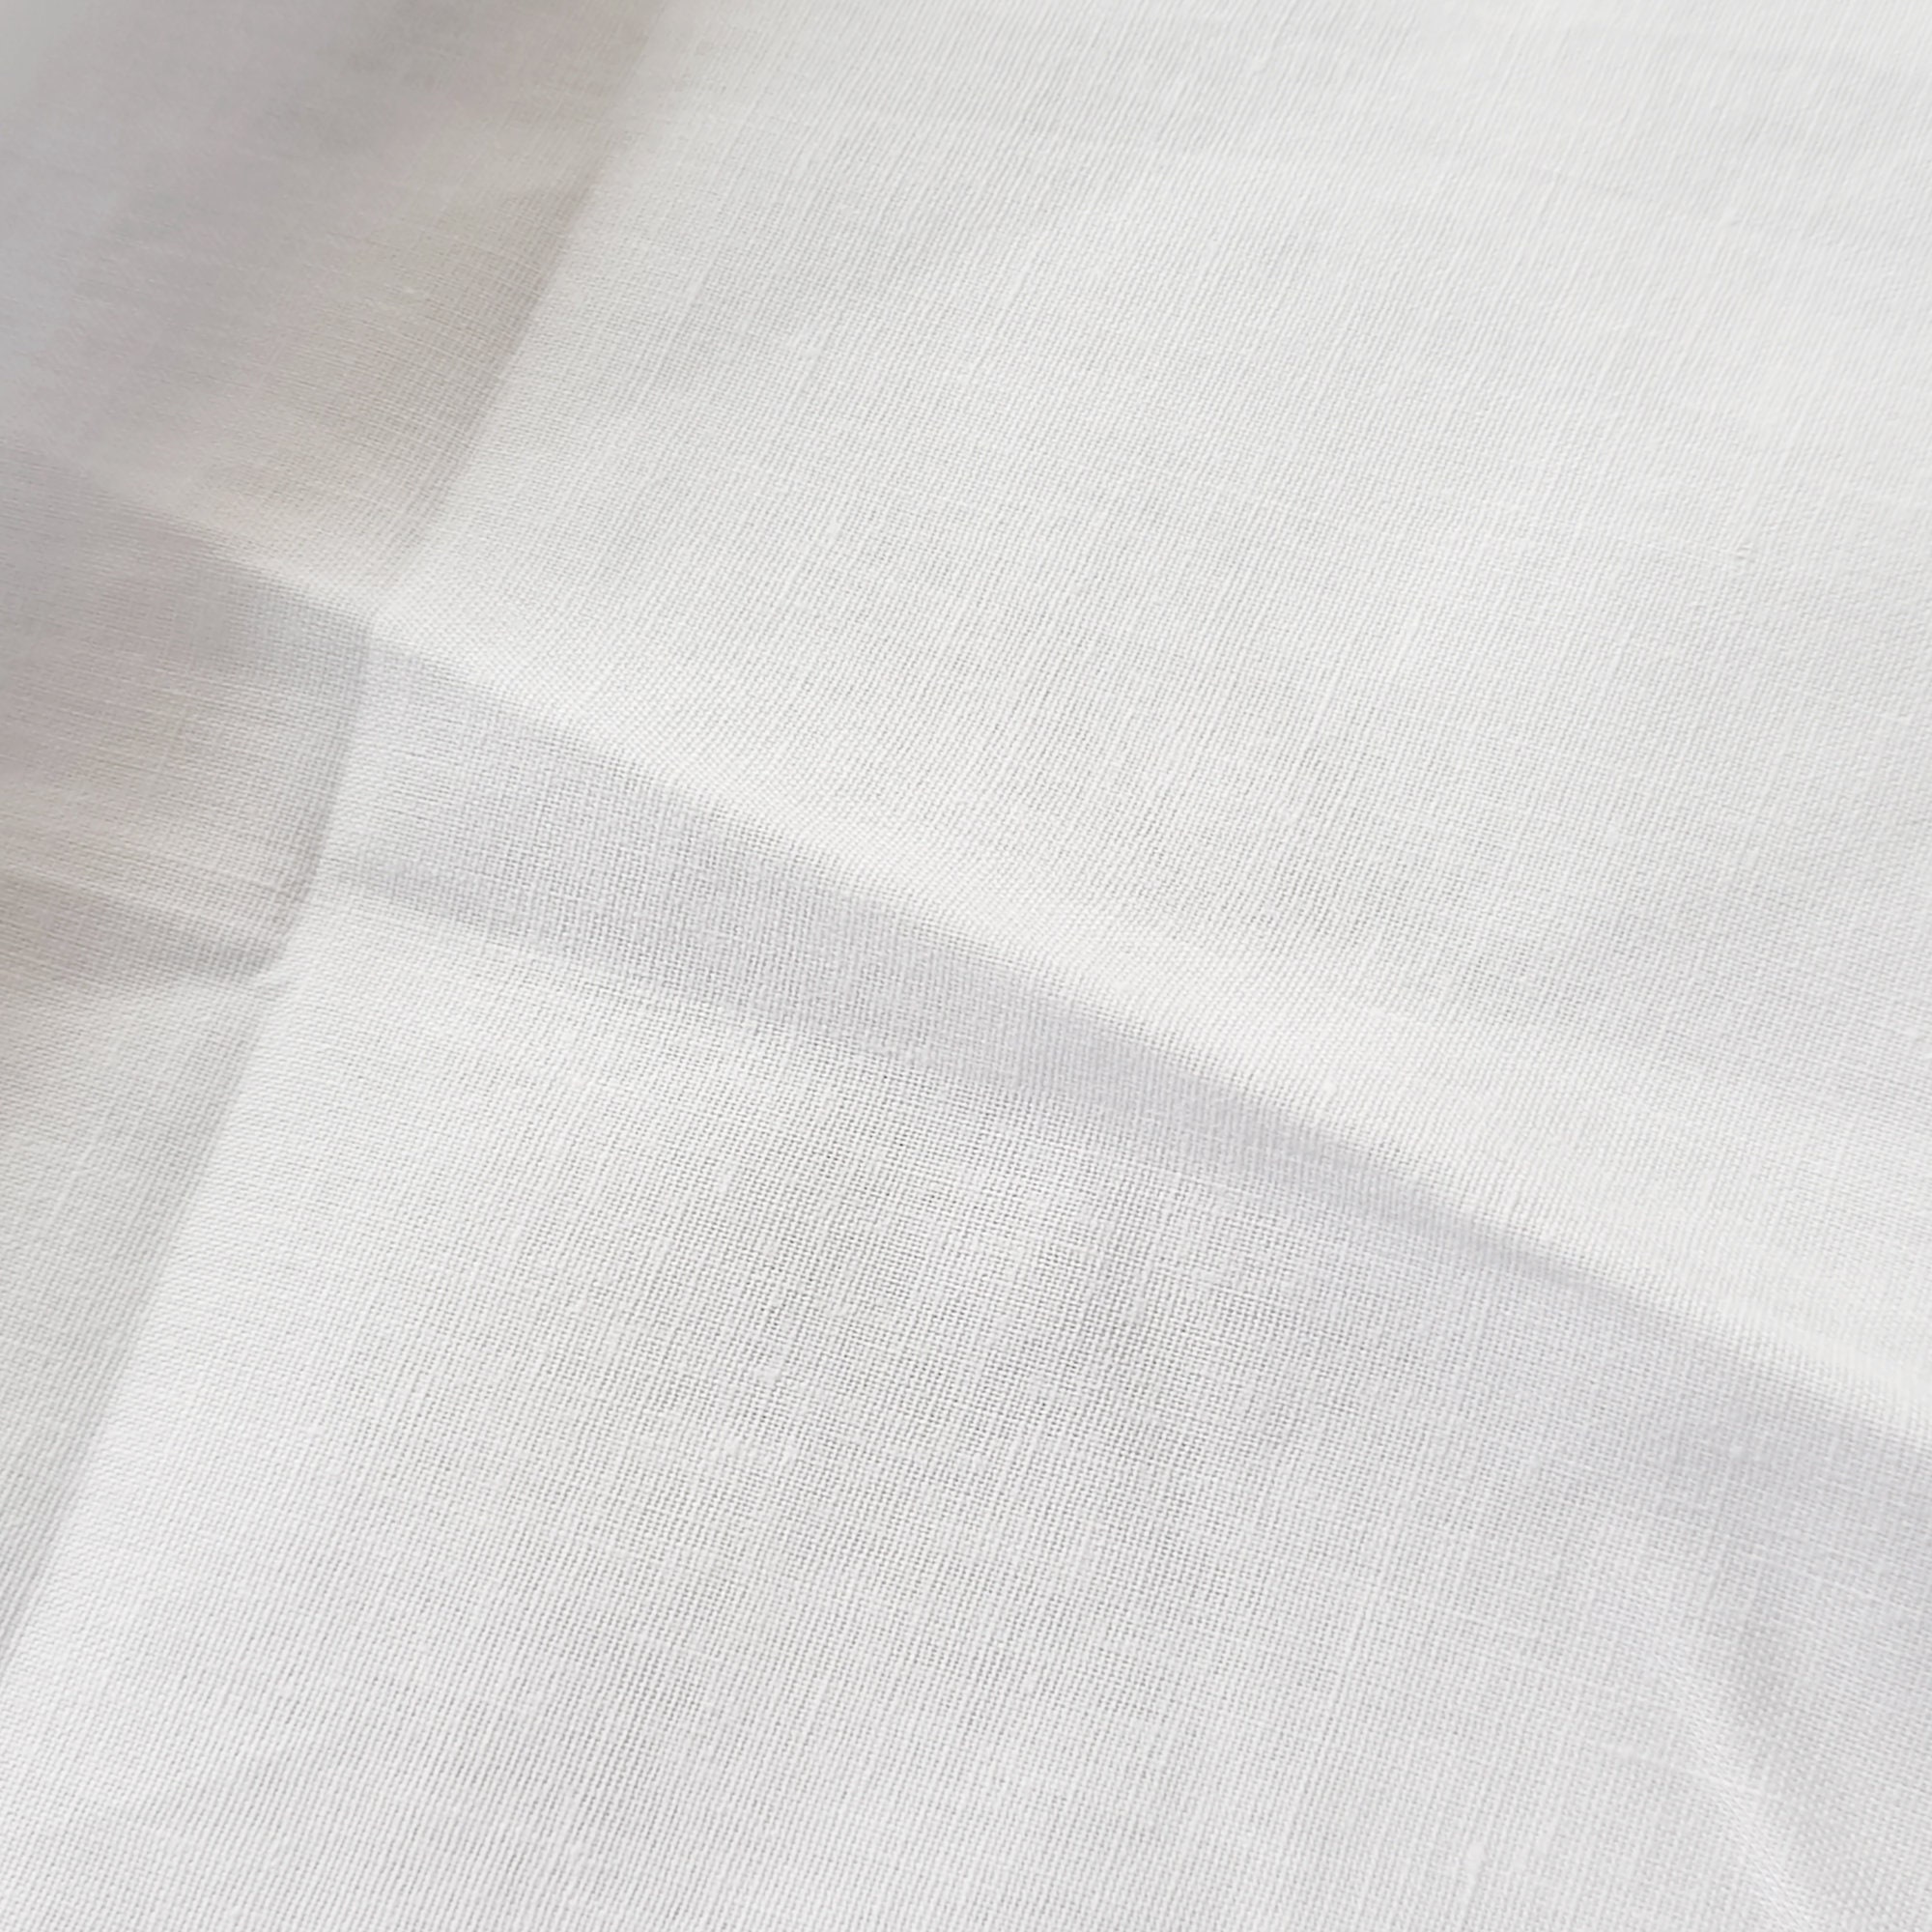 White cotton Fabric Pc 18 x 36